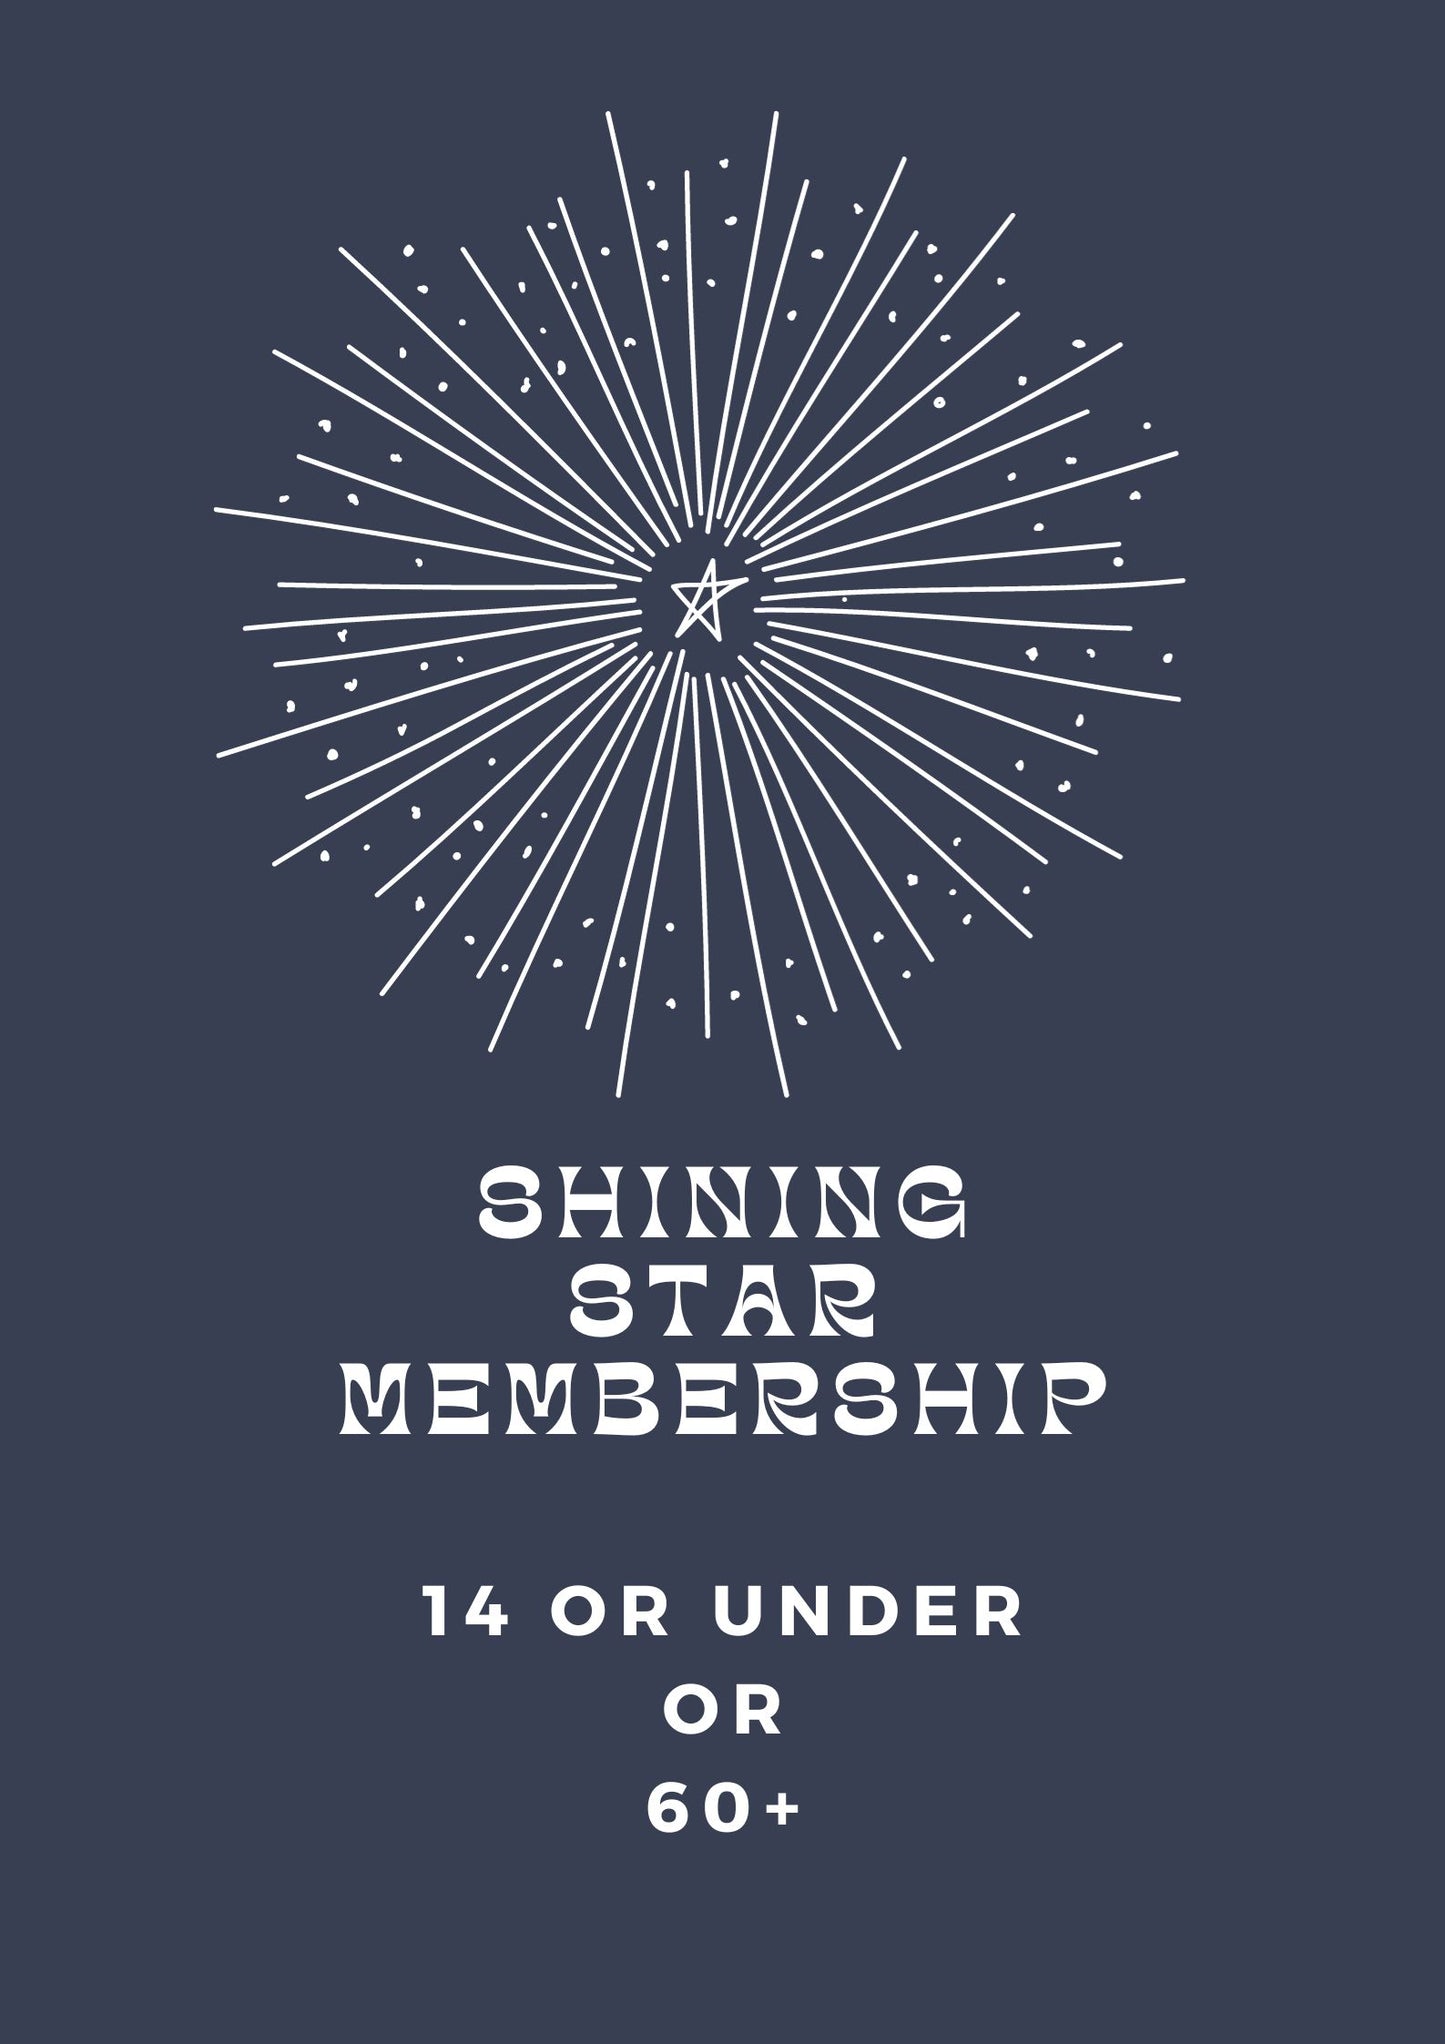 Membership: Shining Star (14 or under or 60+)